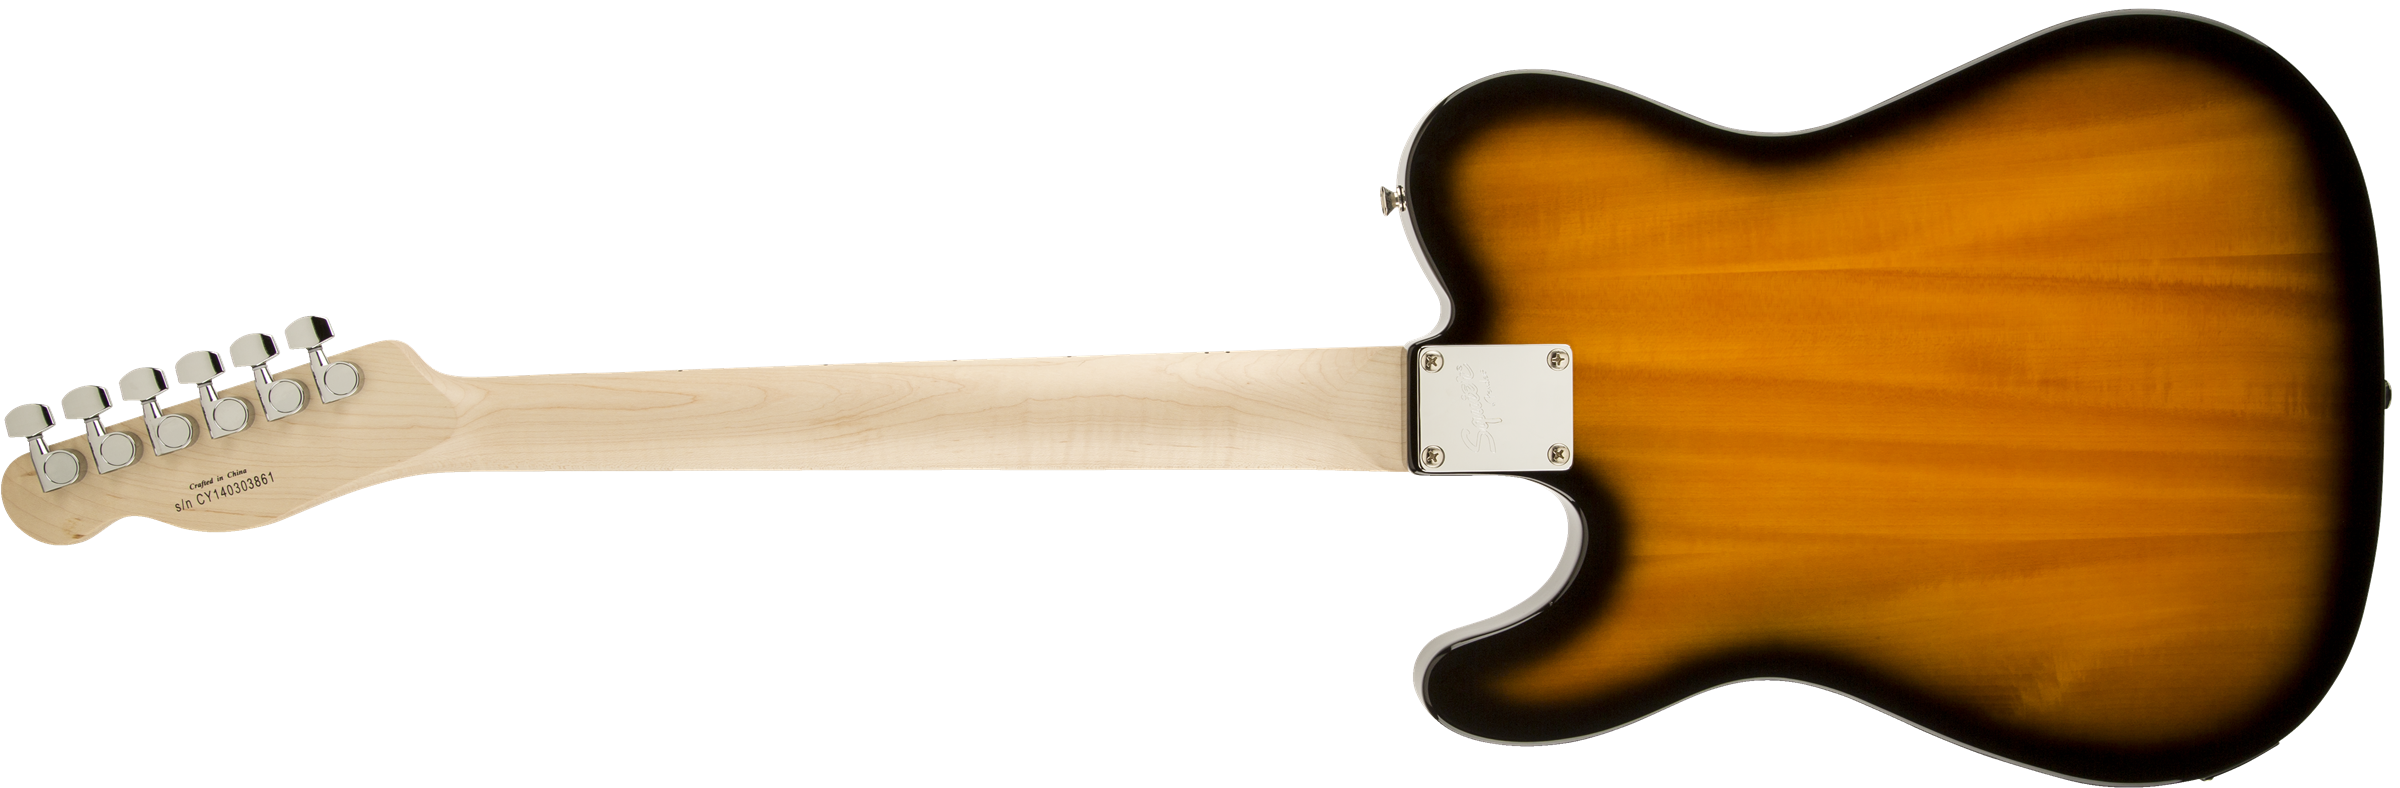 Squier Tele Affinity Series Mn - 2-color Sunburst - Televorm elektrische gitaar - Variation 4